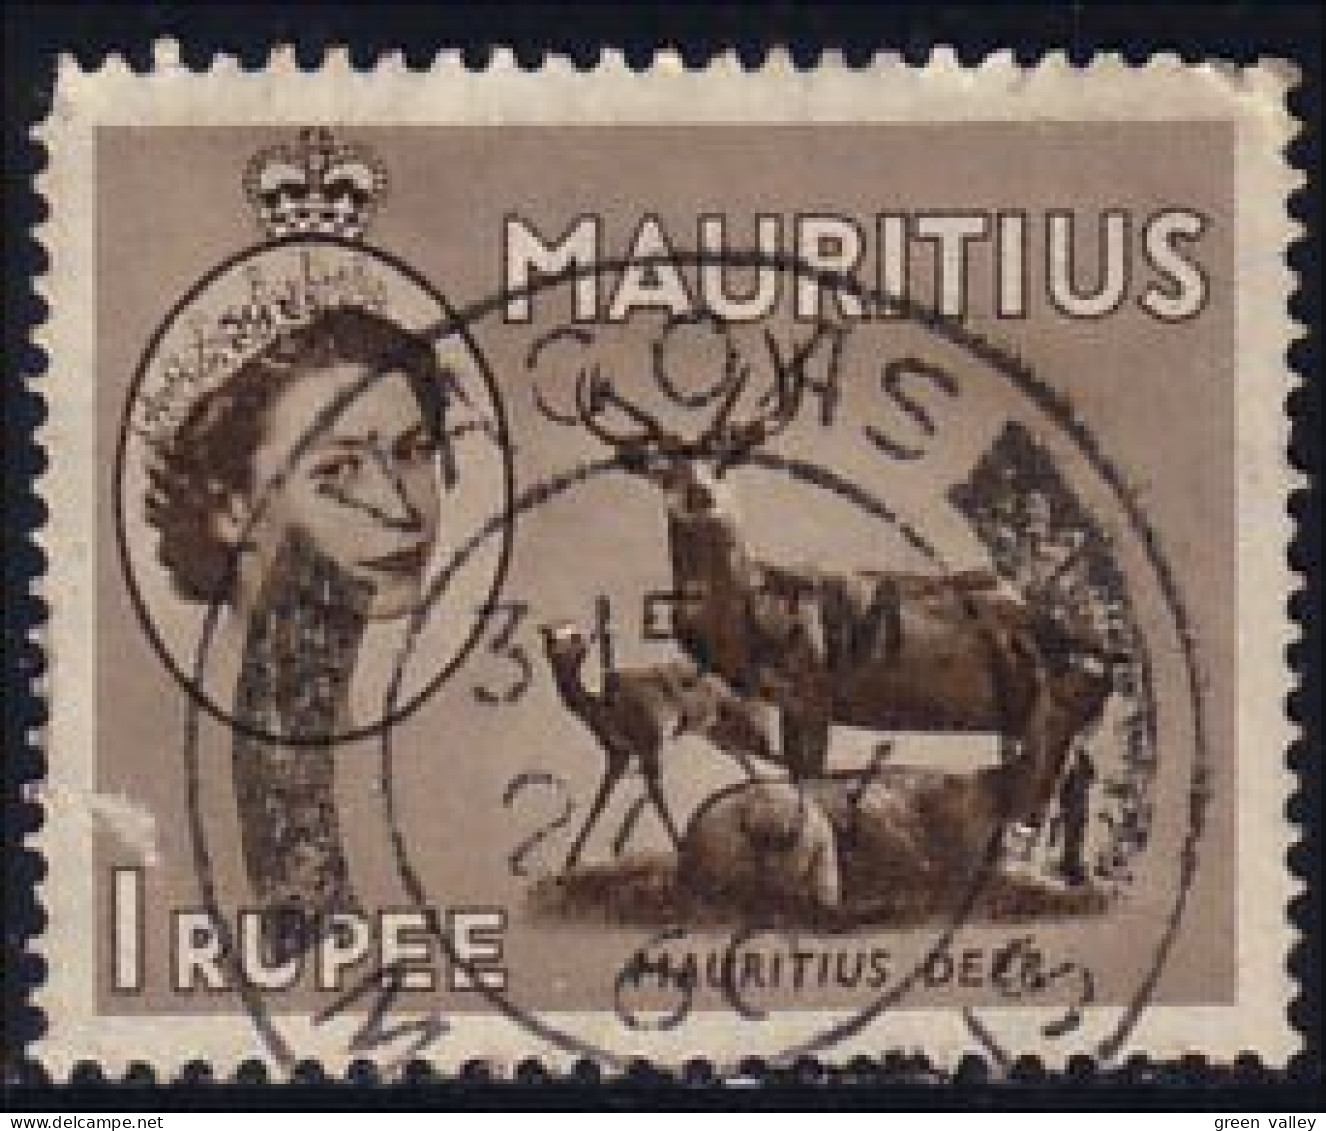 640 Mauritius Ile Maurice Sambar Antelope (MRC-59) - Songbirds & Tree Dwellers